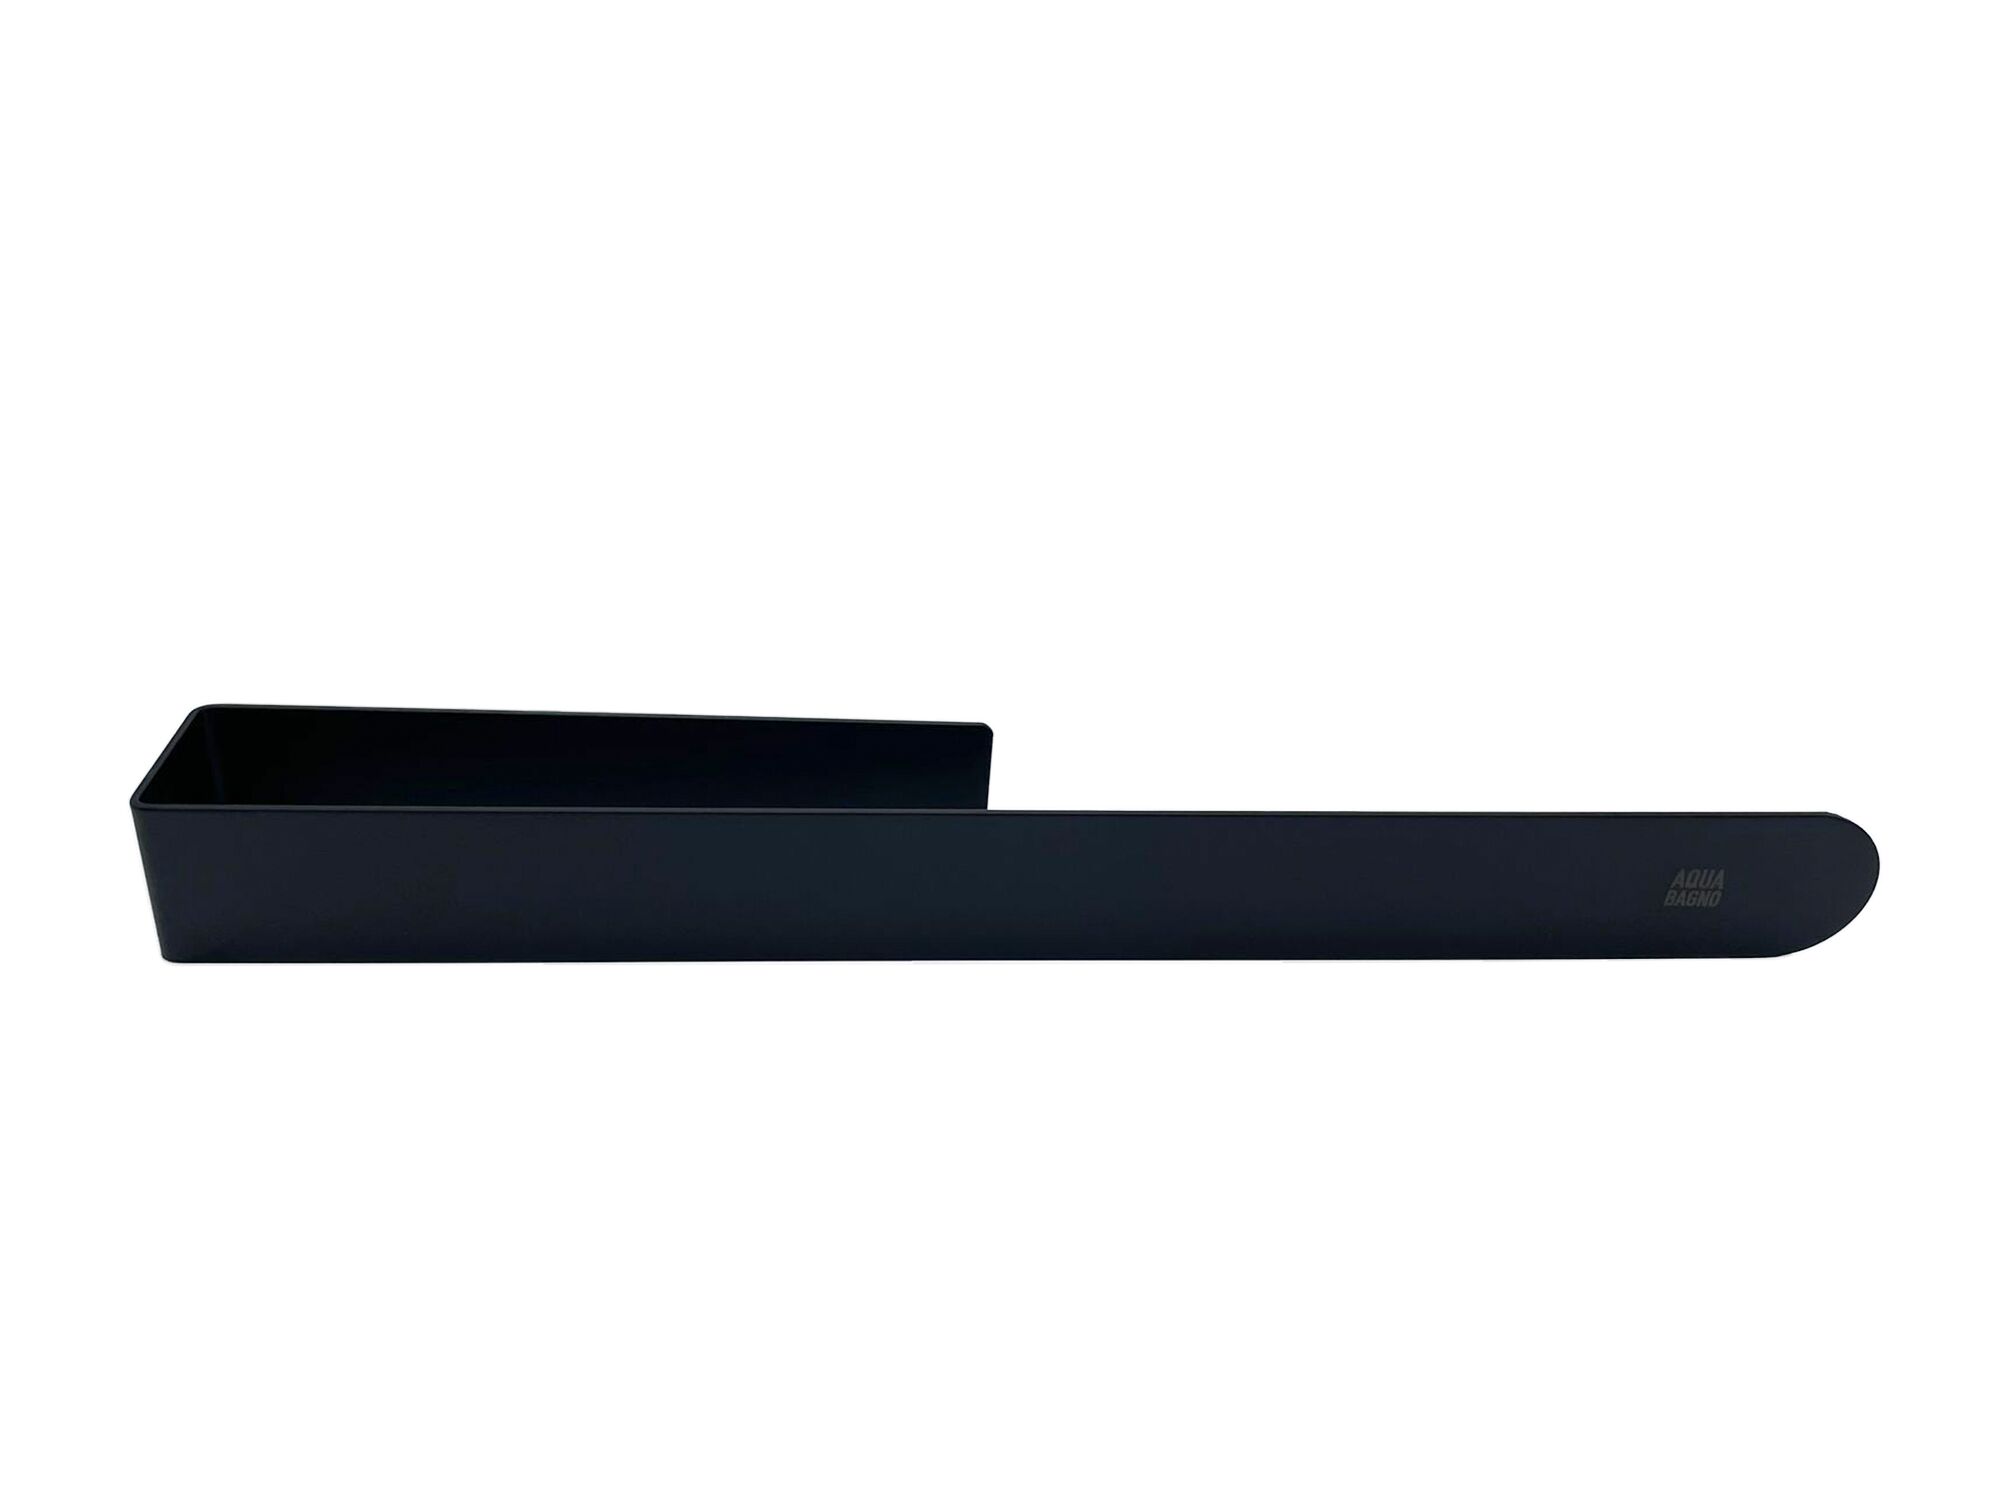 Aqua Bagno Curve Handtuchhalter aus Edelstahl in Optik schwarz matt 37cm zum Kleben- Ohne Bohren